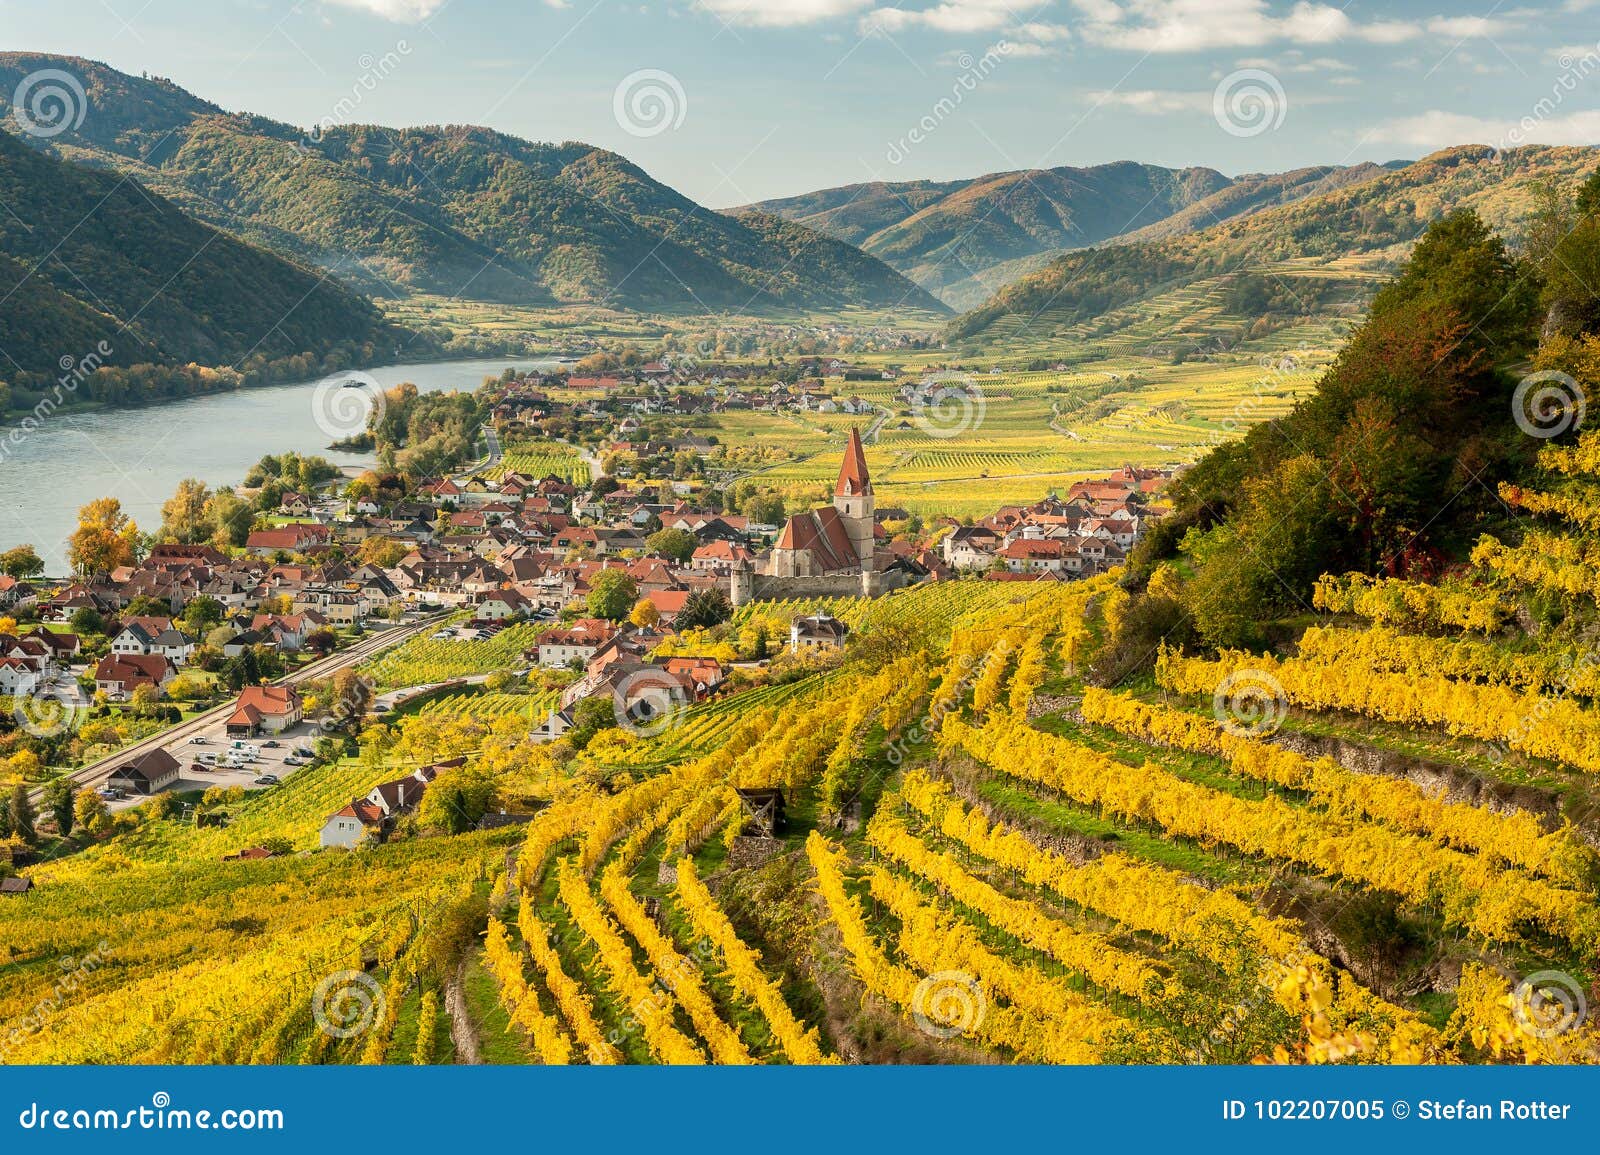 weissenkirchen wachau austria in autumn colored leaves and vineyards